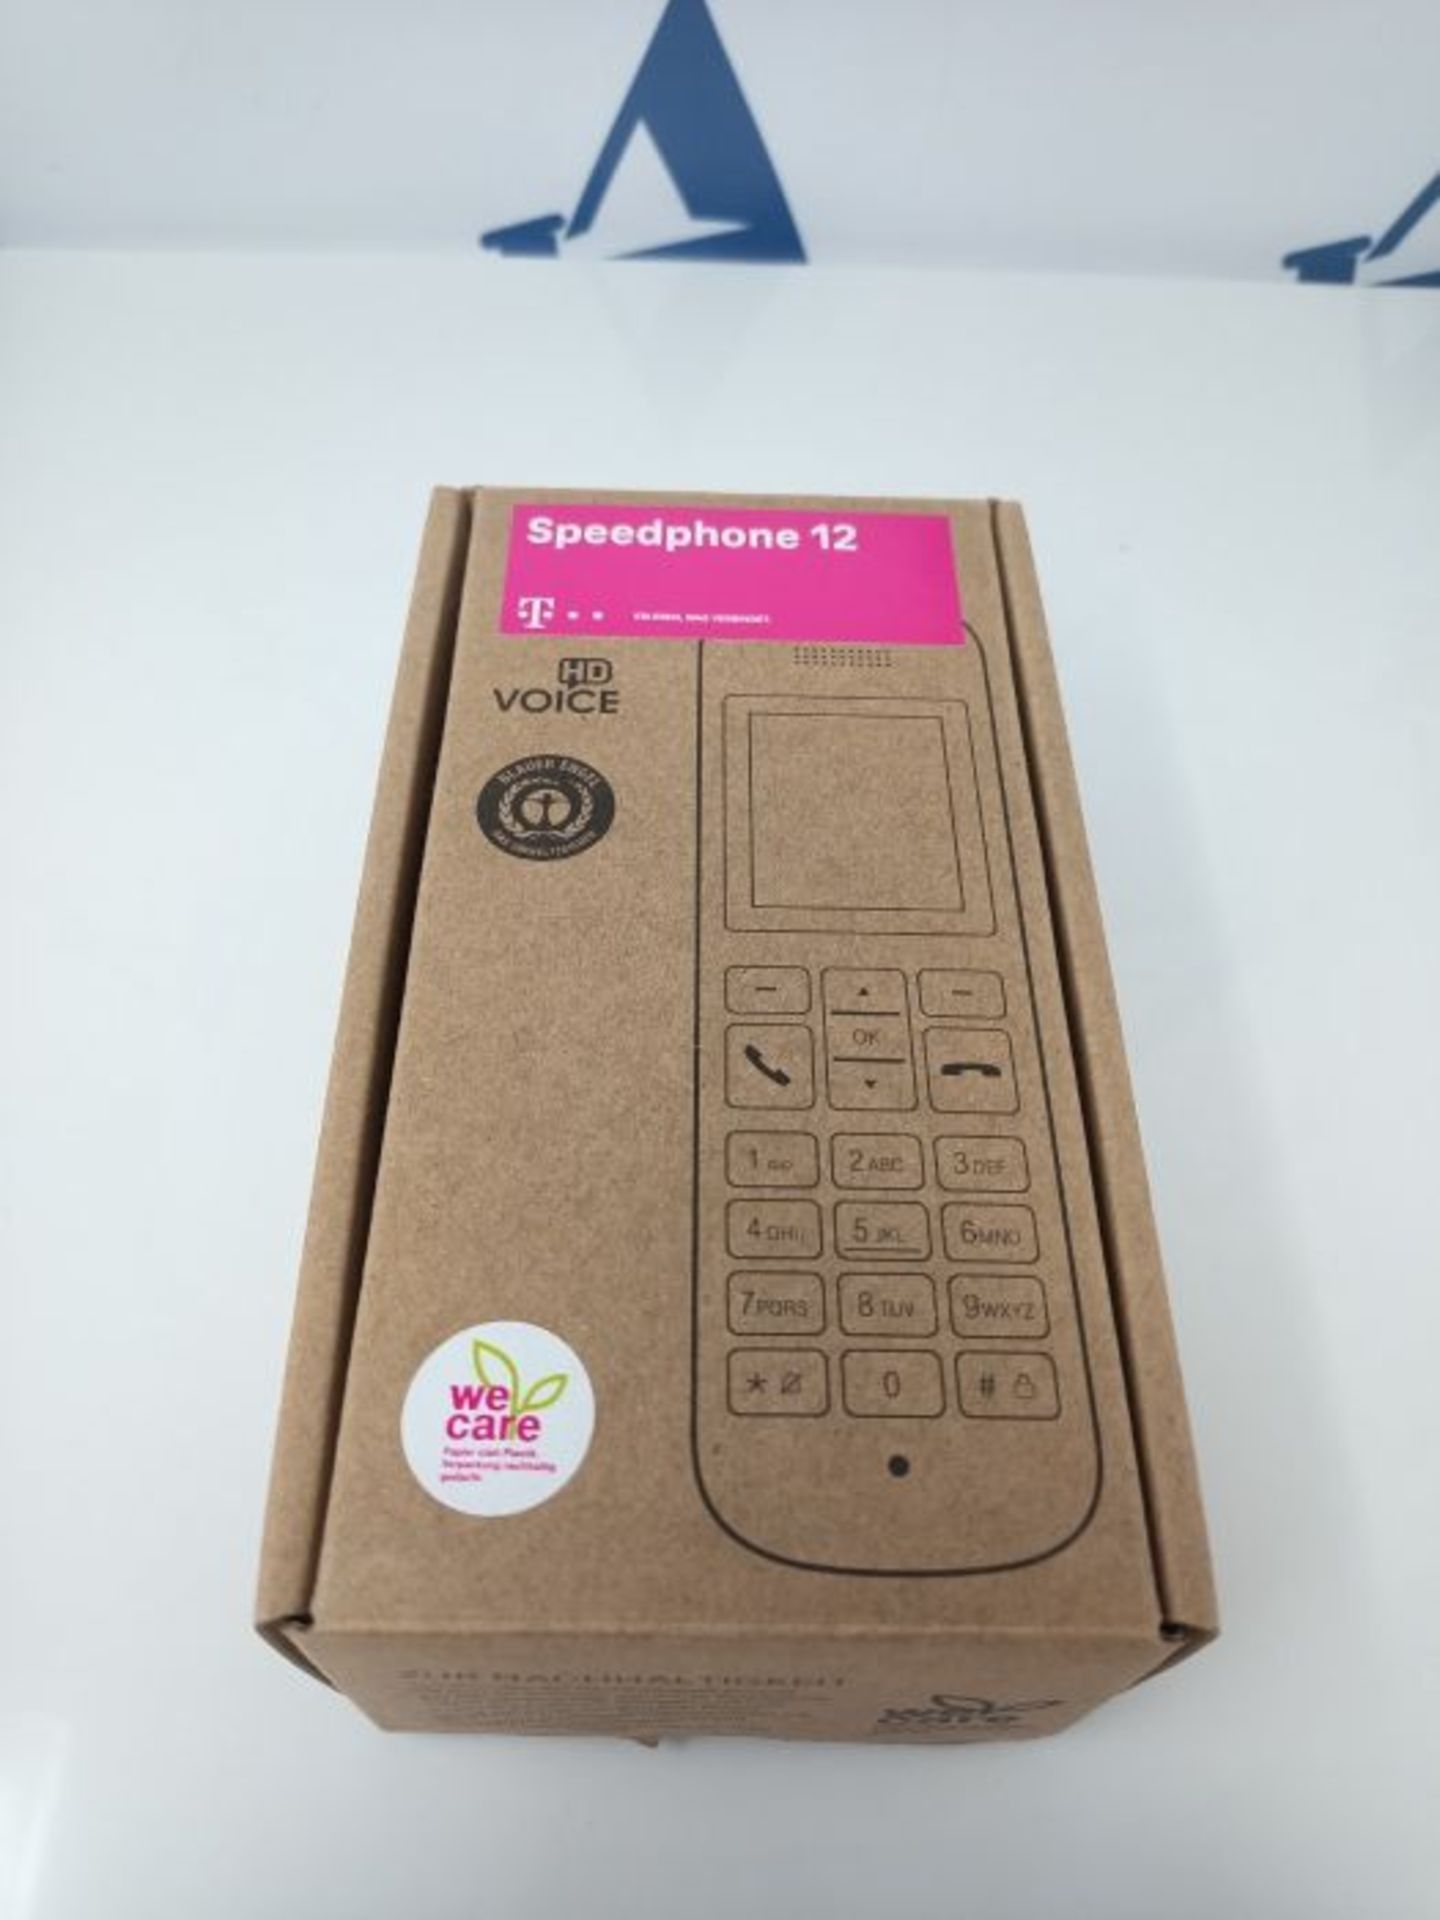 Deutsche Telekom Speedphone 12 landline telephone in black cordless | For use with cur - Image 2 of 3